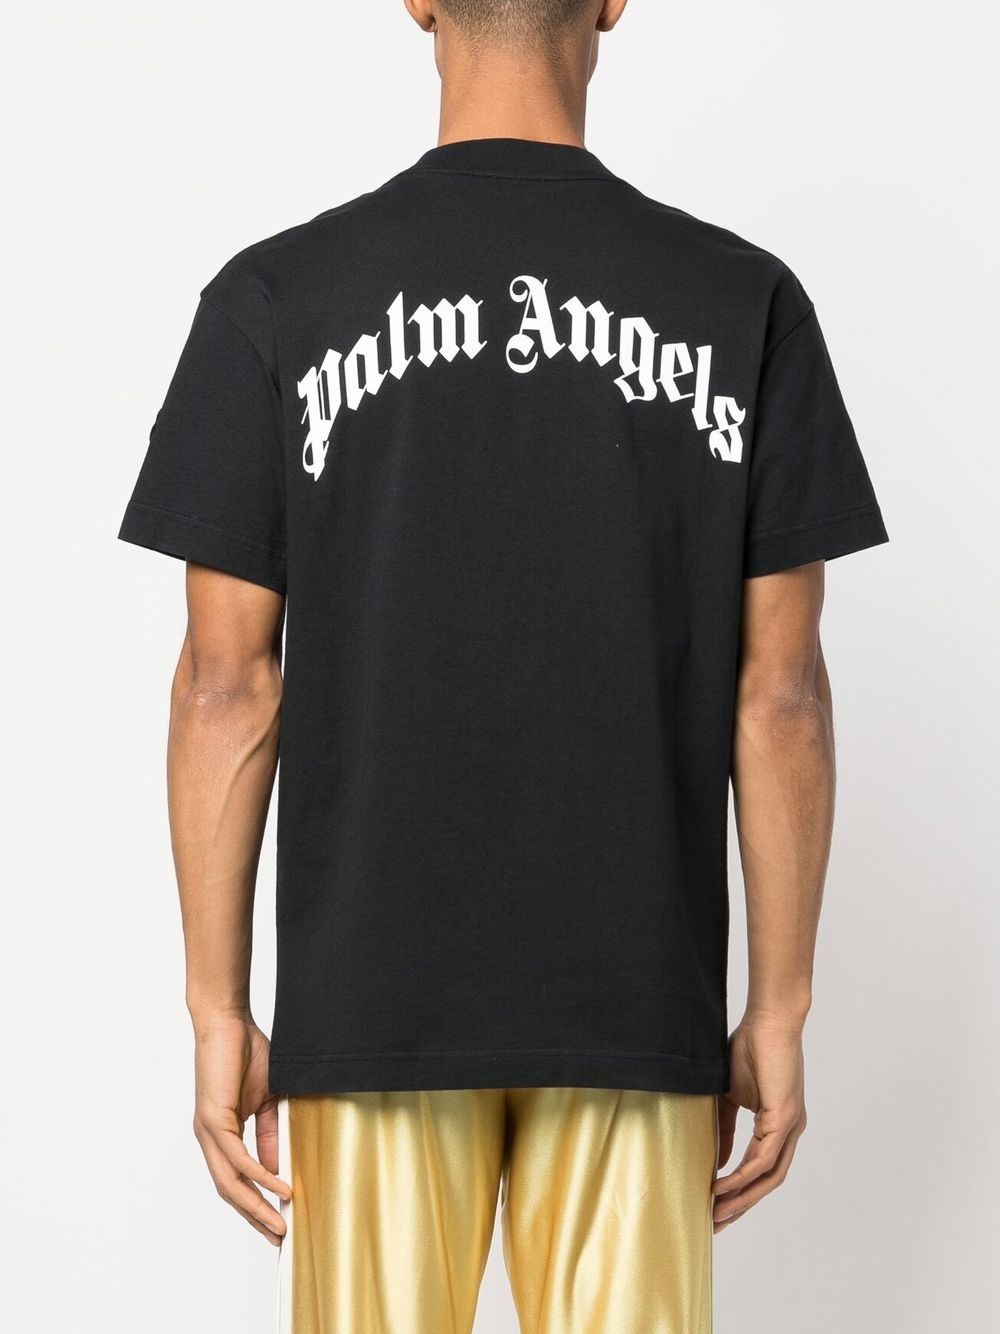 Moncler X Palm Angels Flame Bear T-Shirt